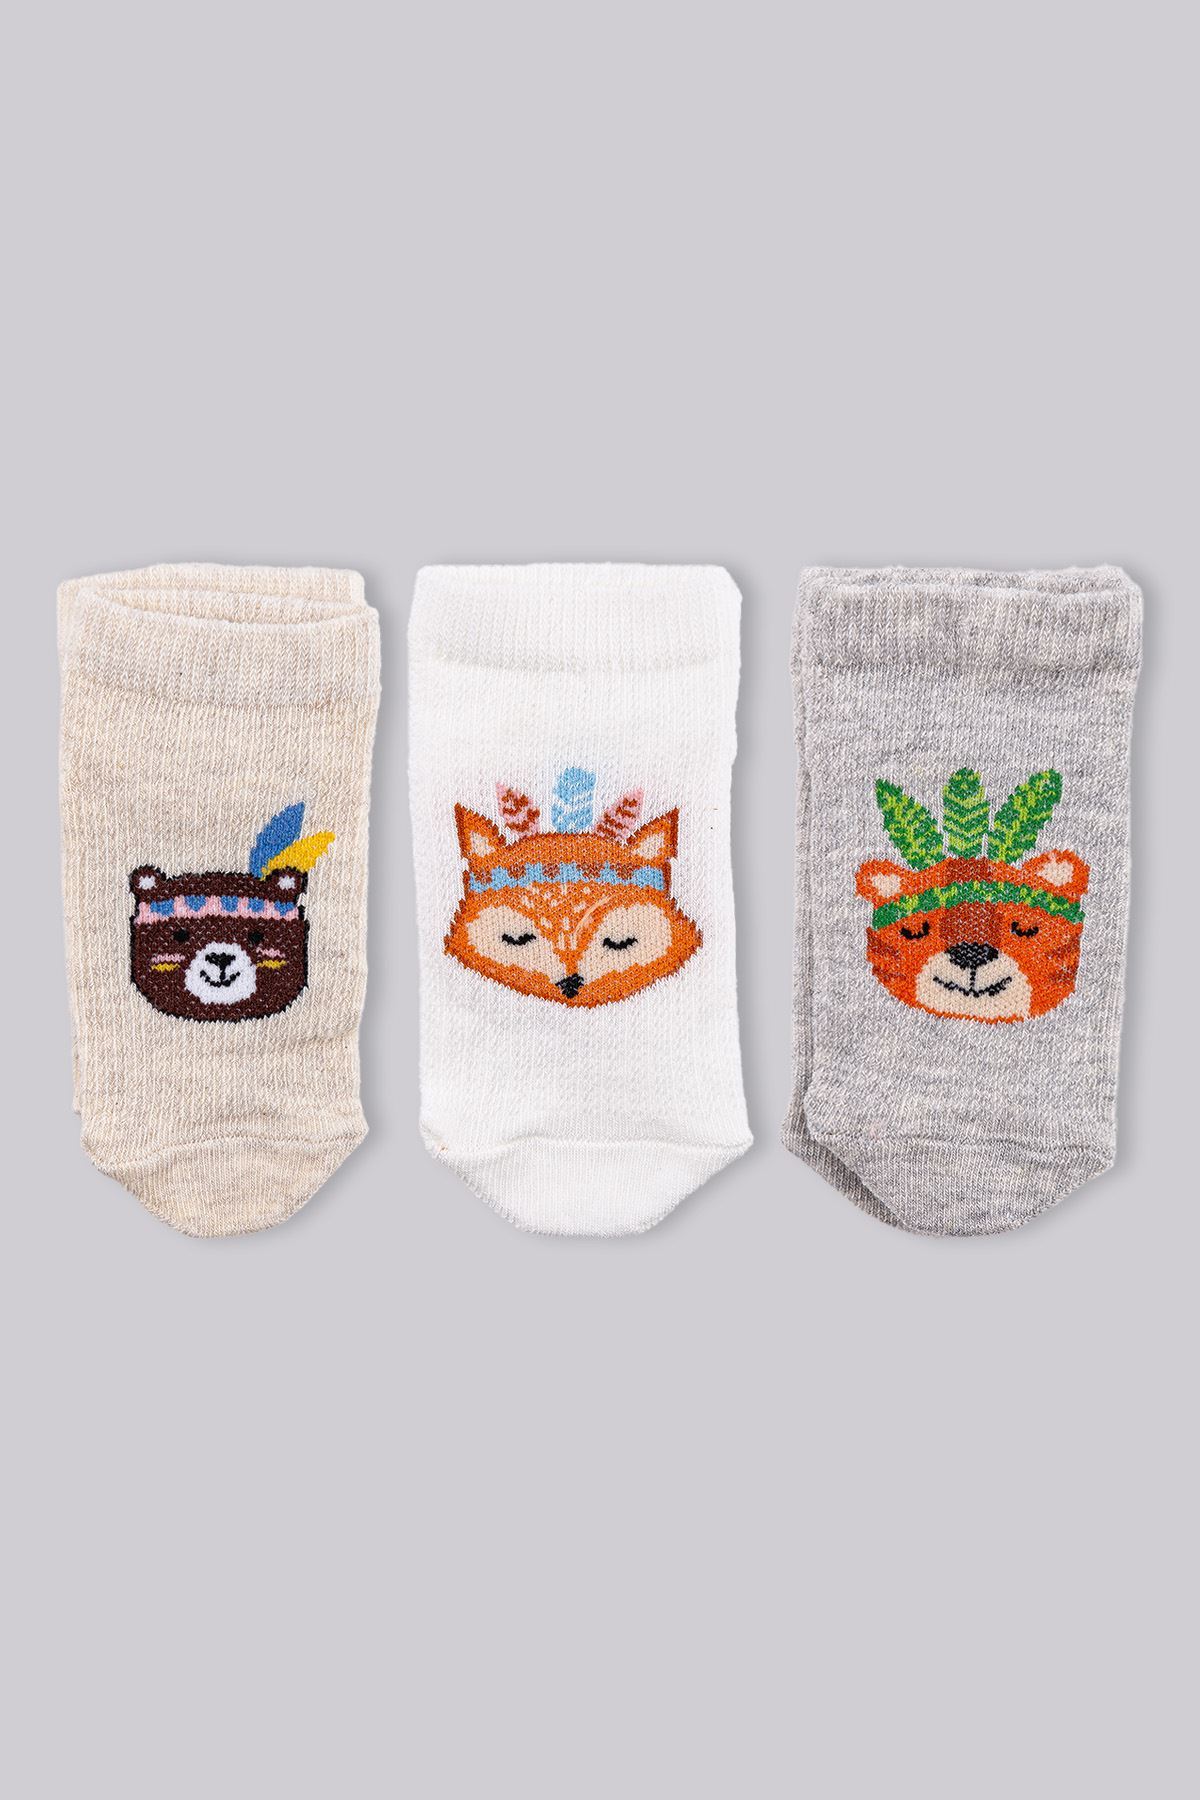 ANIMAL BABY BOY SOCKS | Buy Branded Wholesale Socks Online At ...